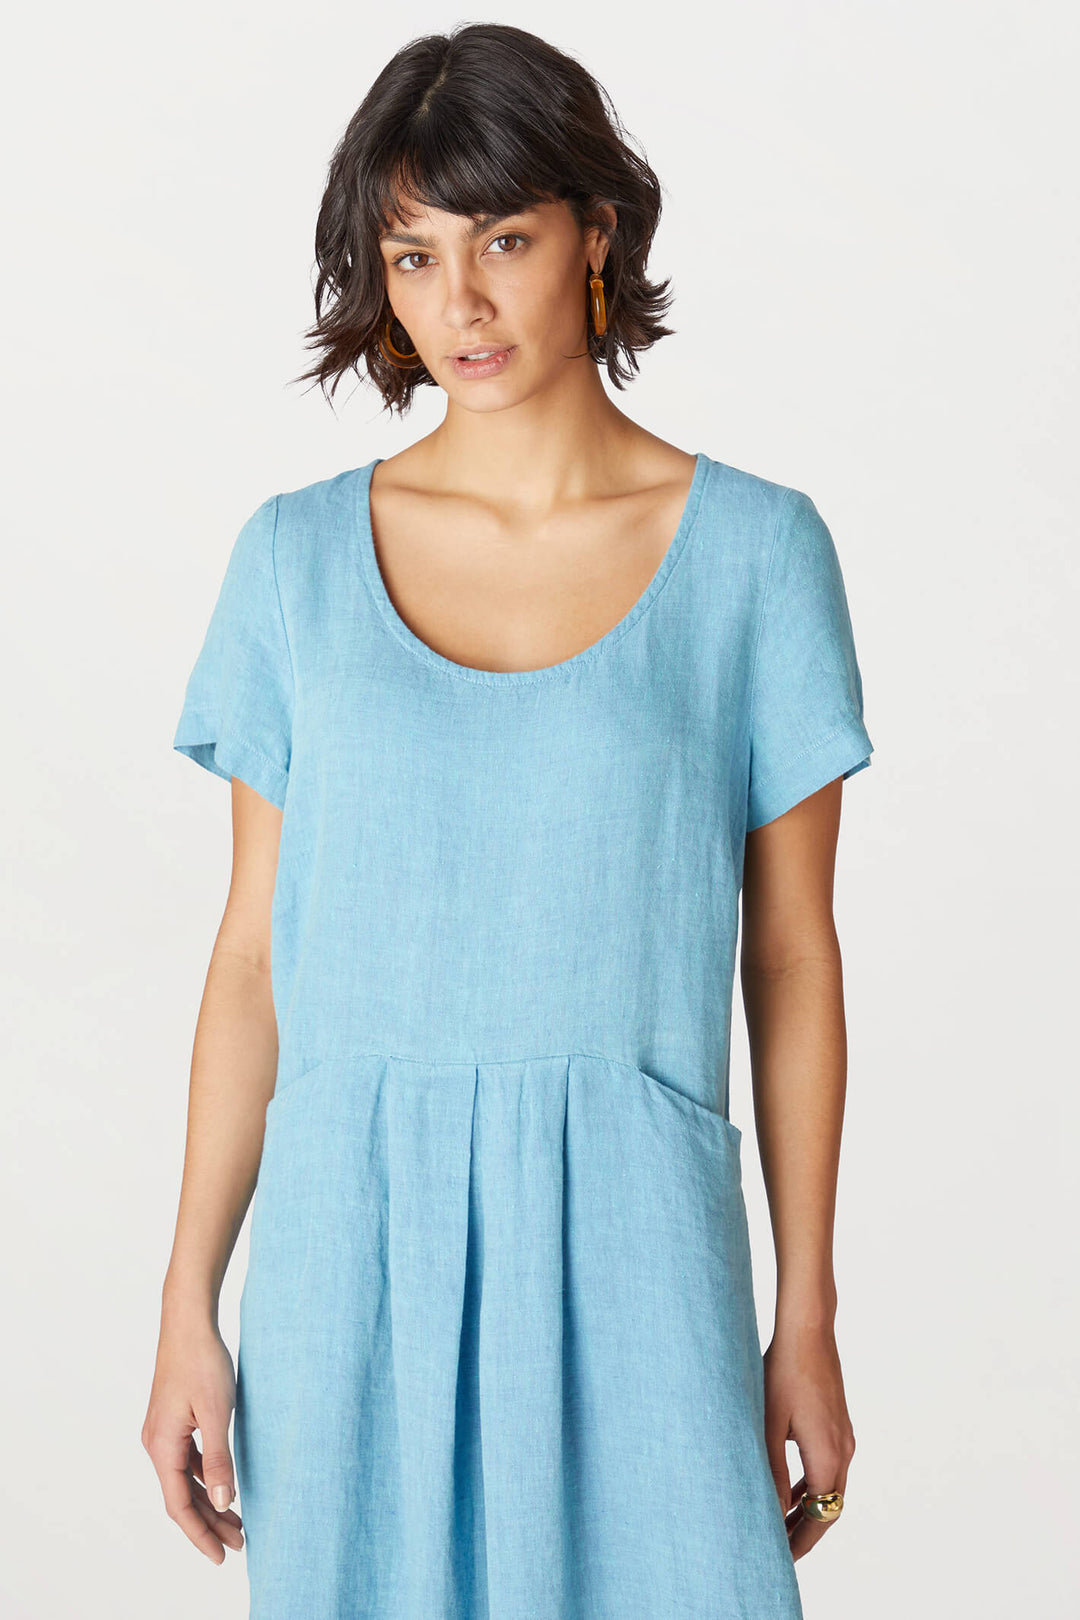 Sahara LAD5300-NCD Sky Blue Cross Dye Linen Bubble Dress - Shirley Allum Boutique